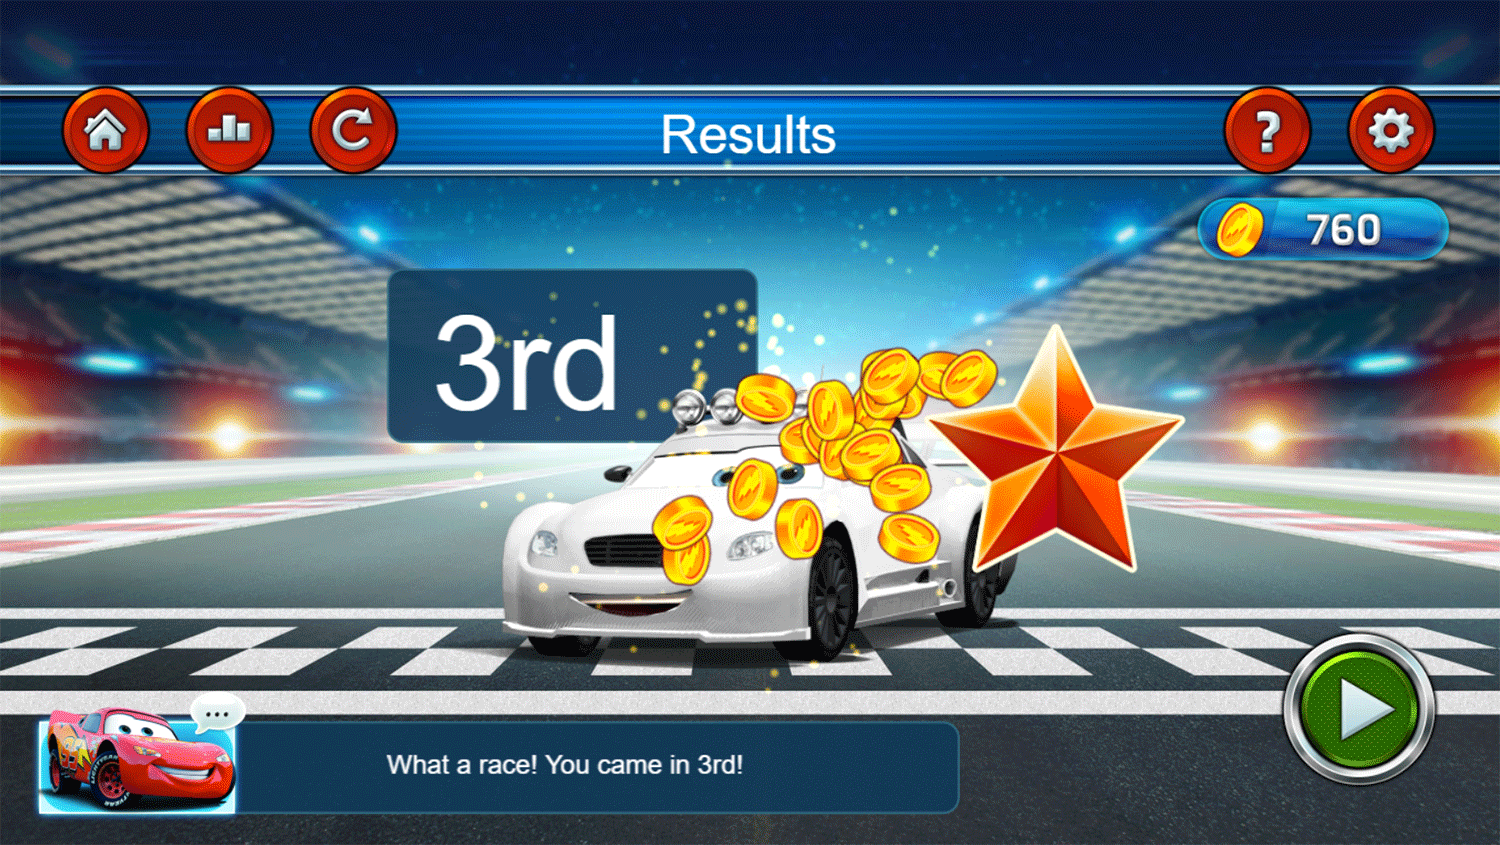 Cars Lightning Speed Game Results Screenshot.